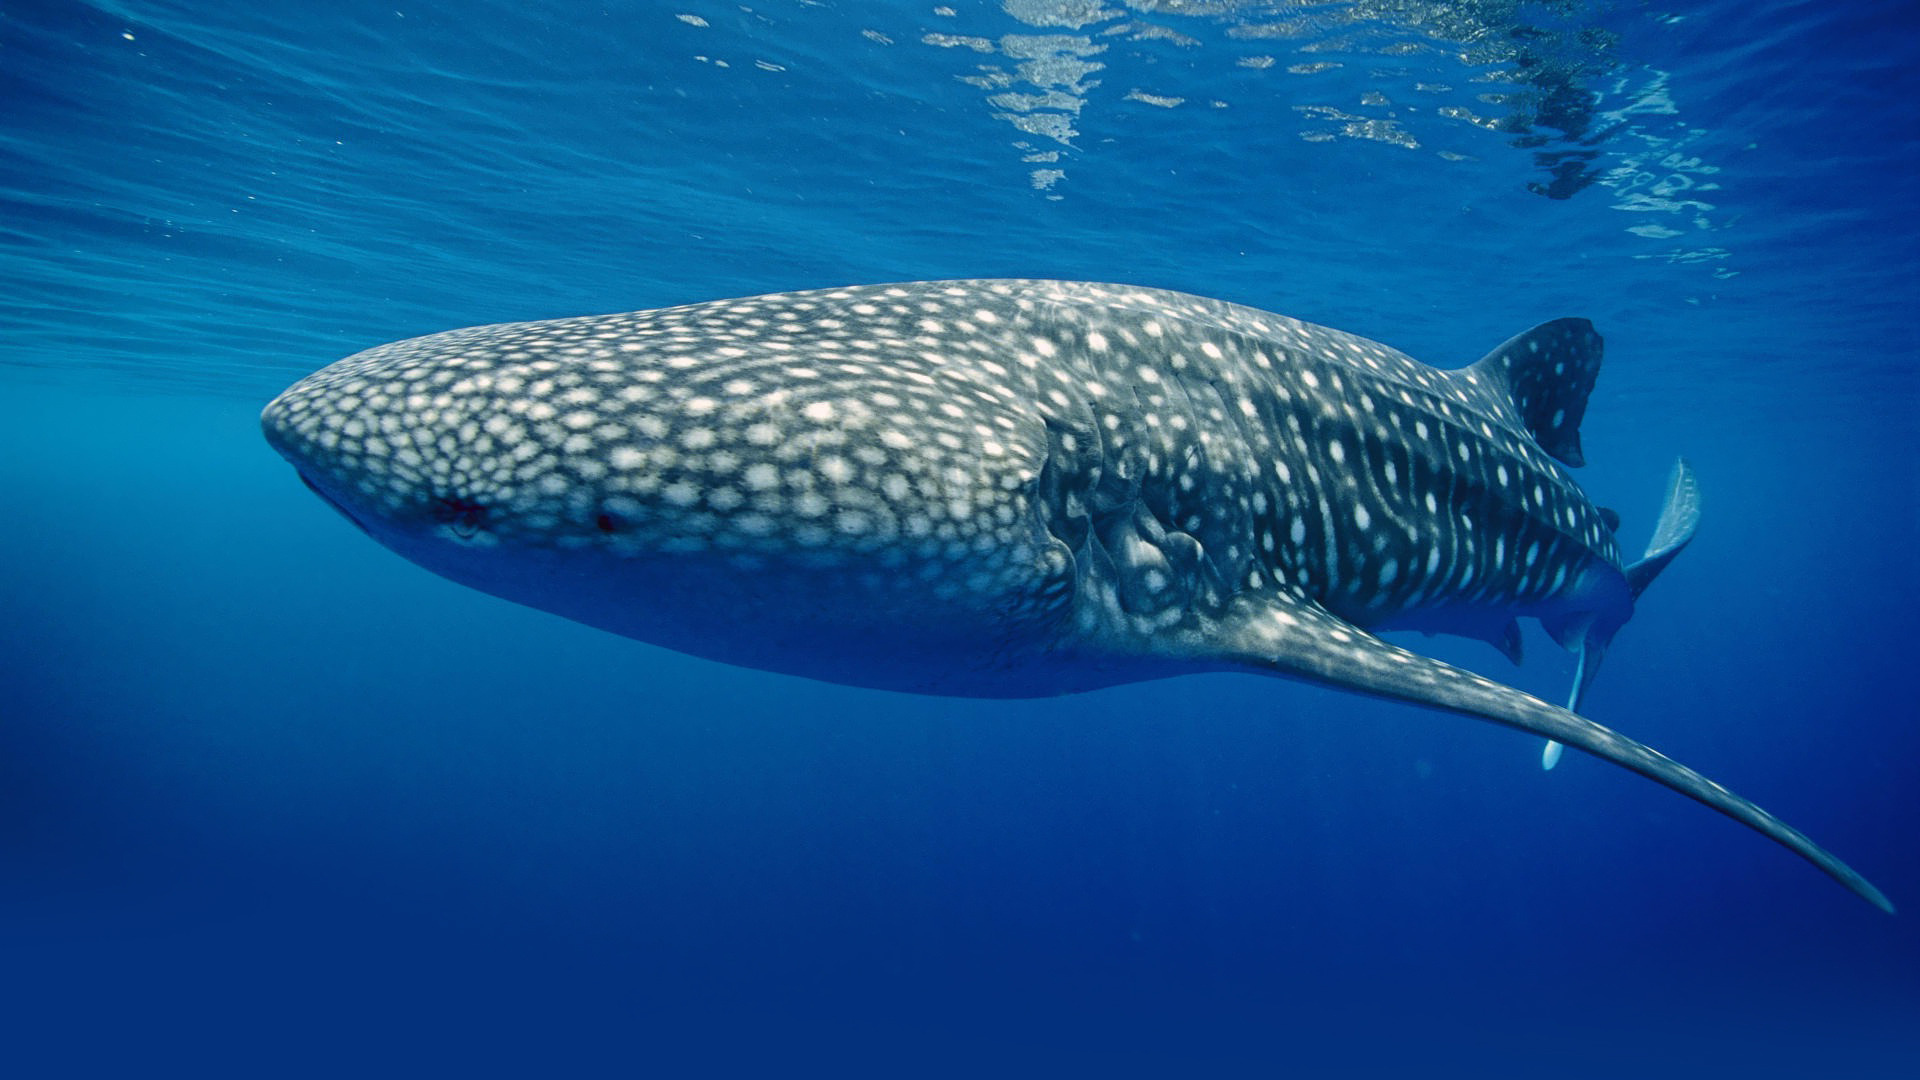 5349 Happy Whale Shark Images Stock Photos  Vectors  Shutterstock